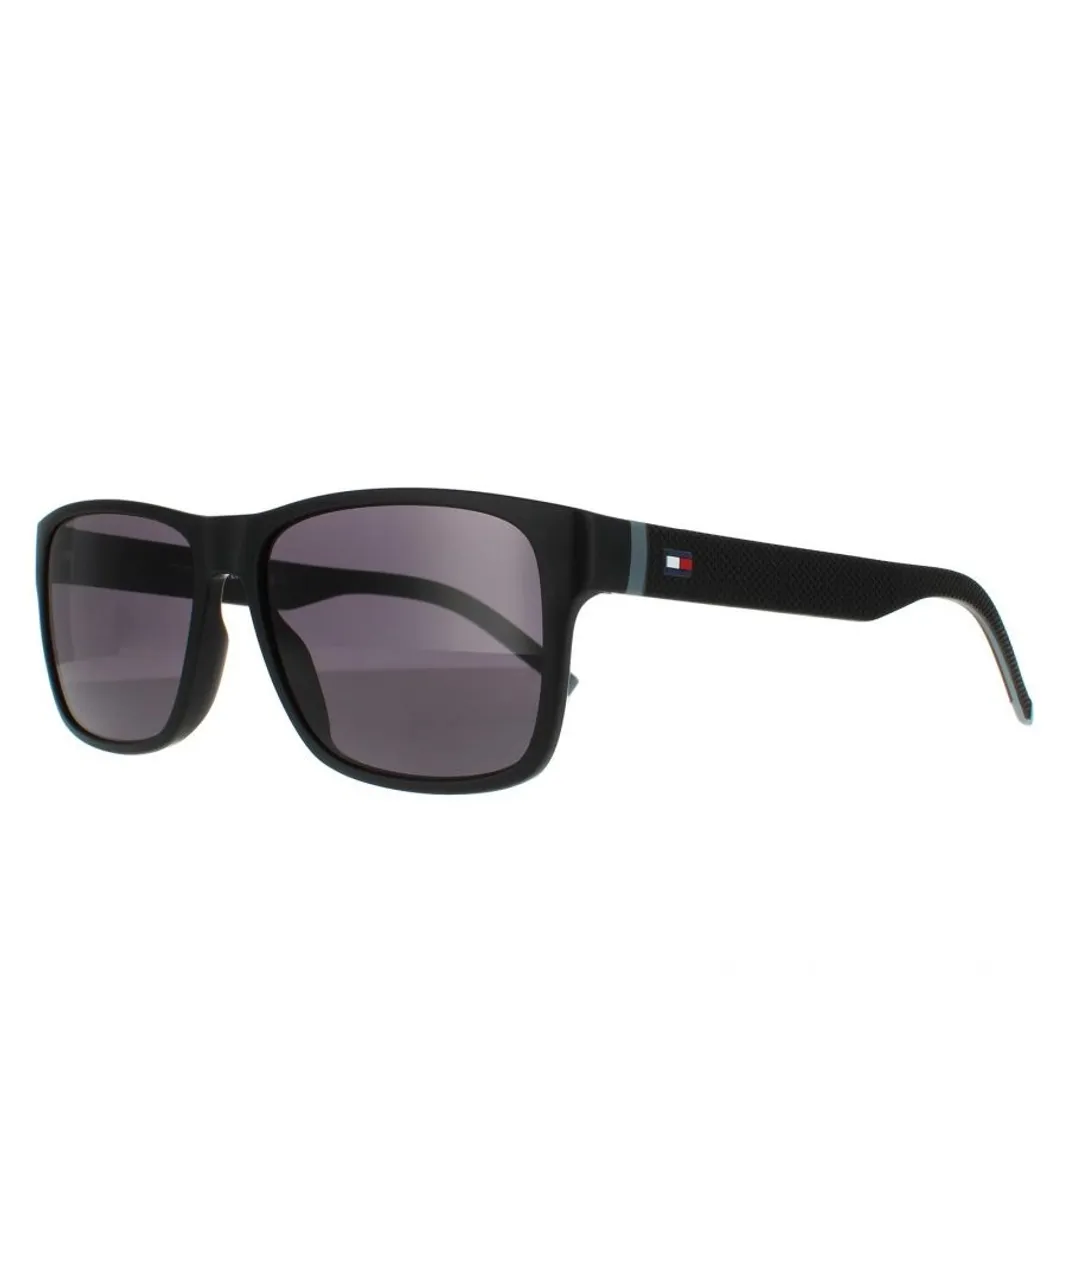 Tommy Hilfiger Rectangle Mens Matte Black Grey Sunglasses - One